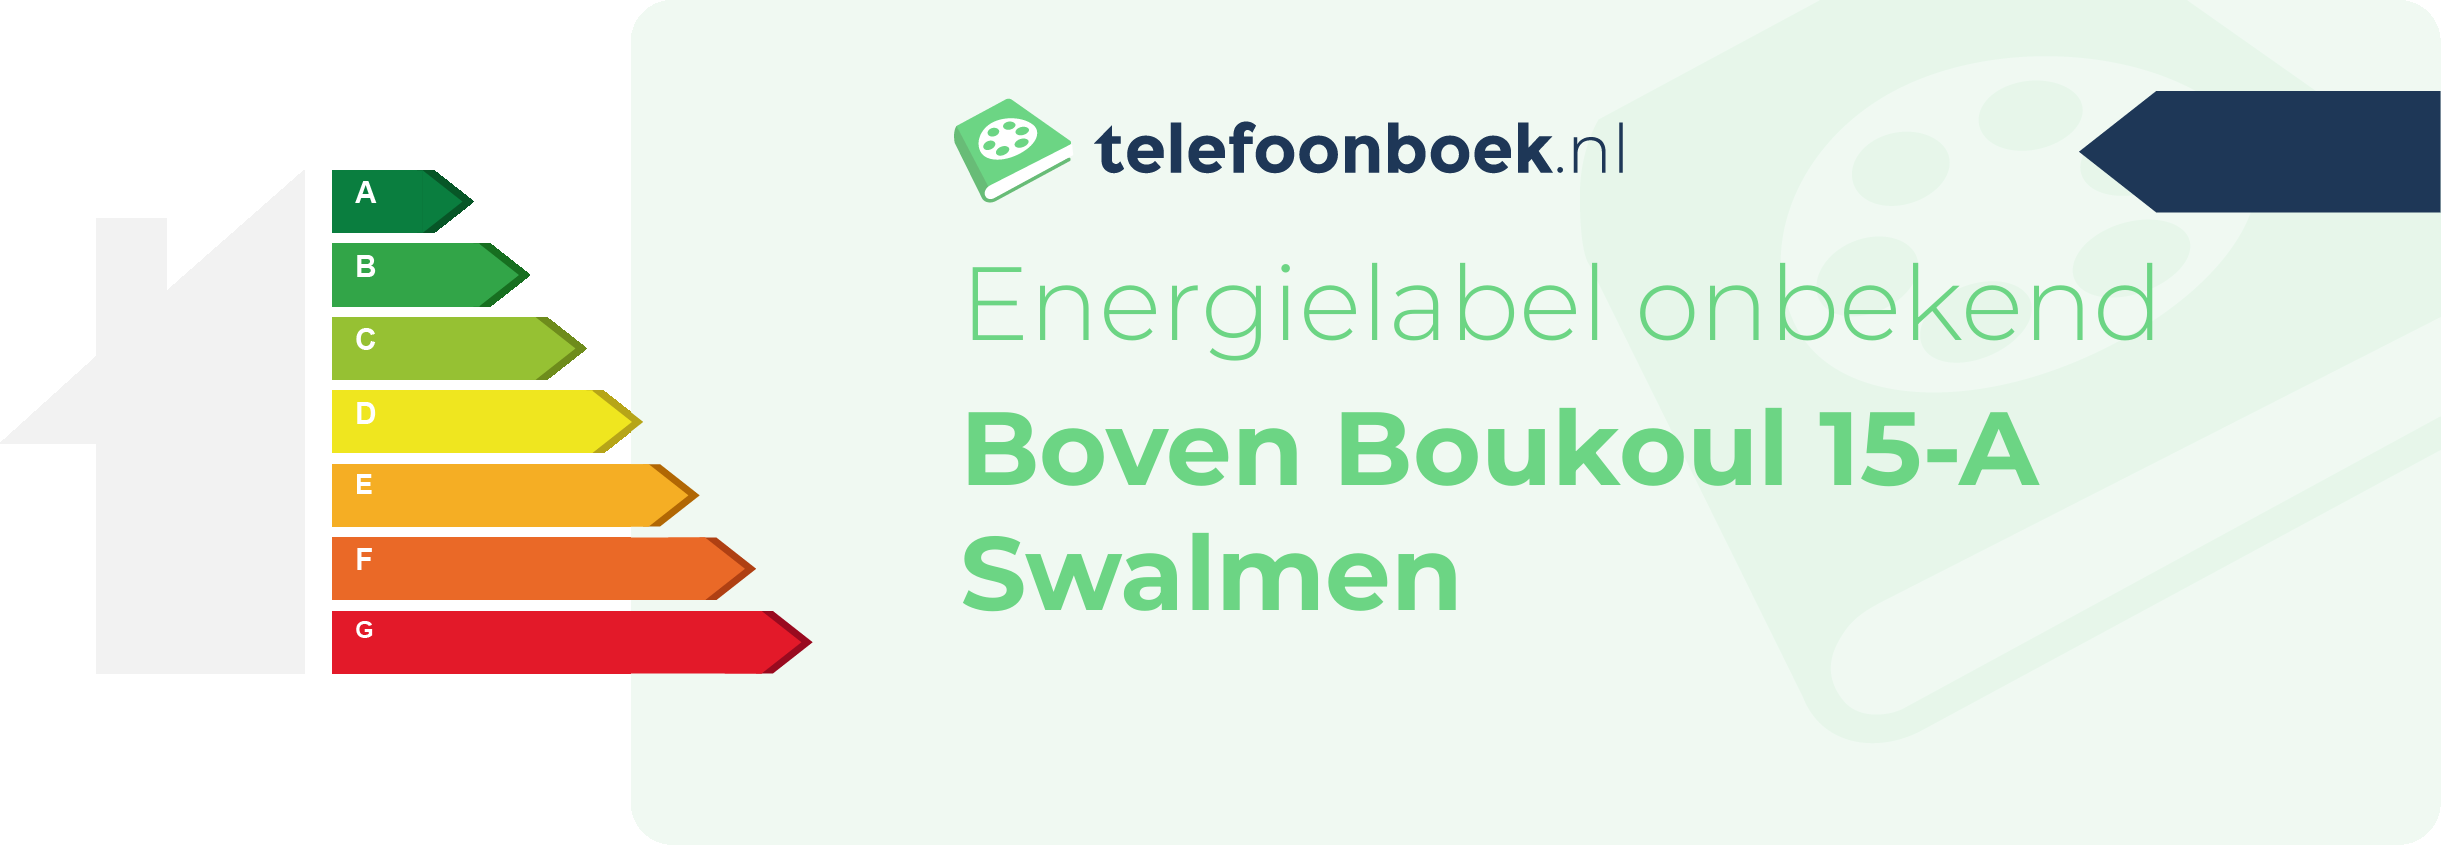 Energielabel Boven Boukoul 15-A Swalmen